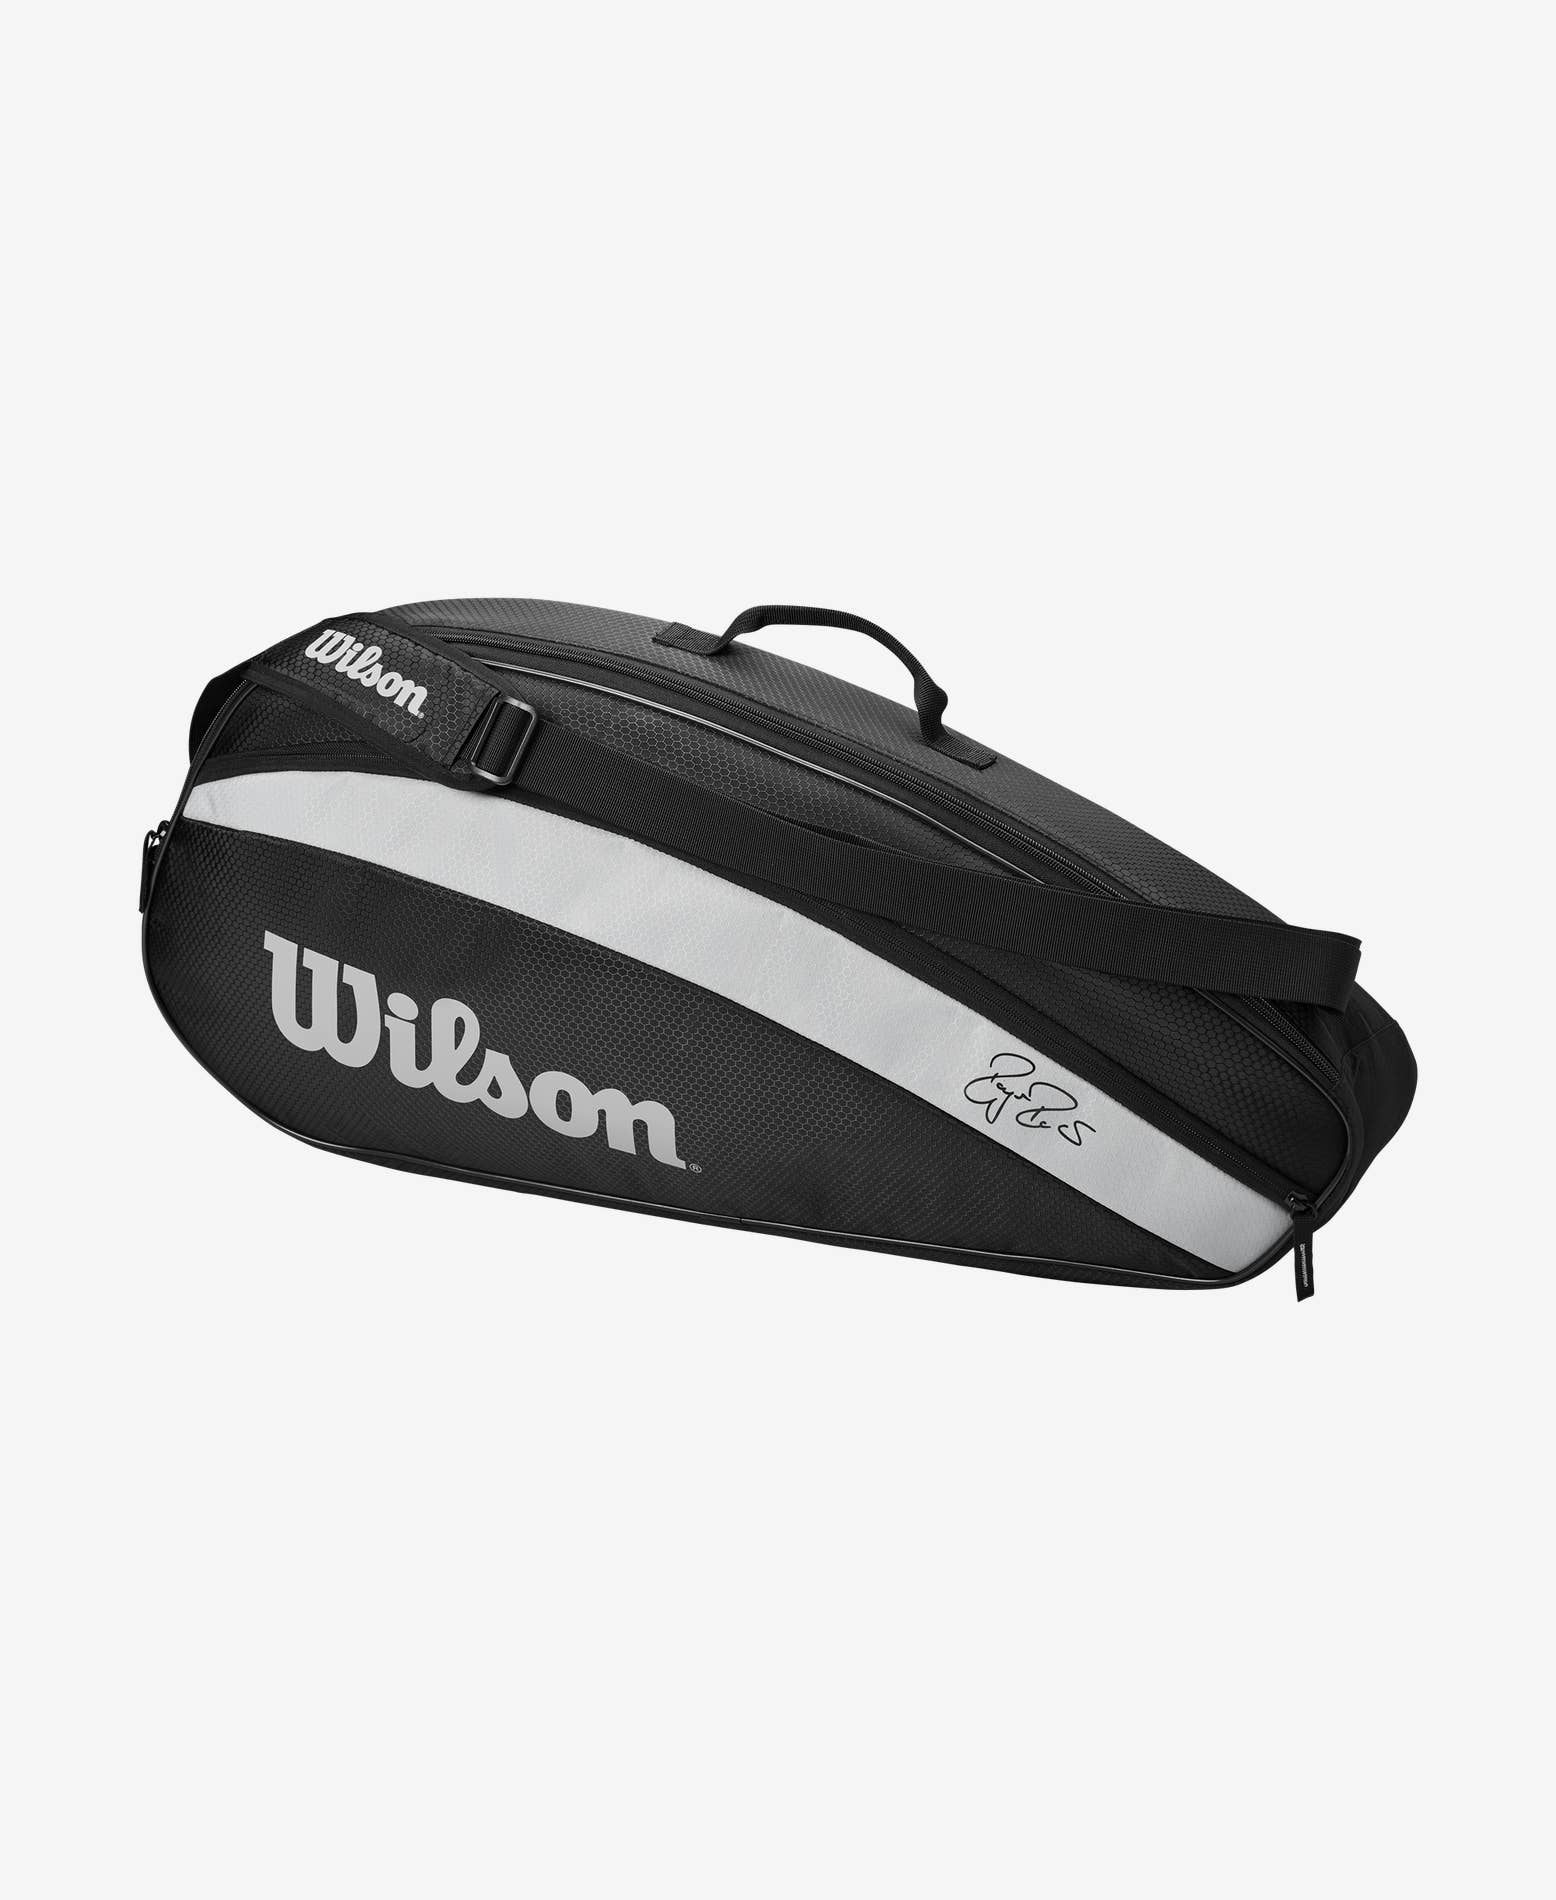 Wilson Fed Team 3pk Tennis Black Bag